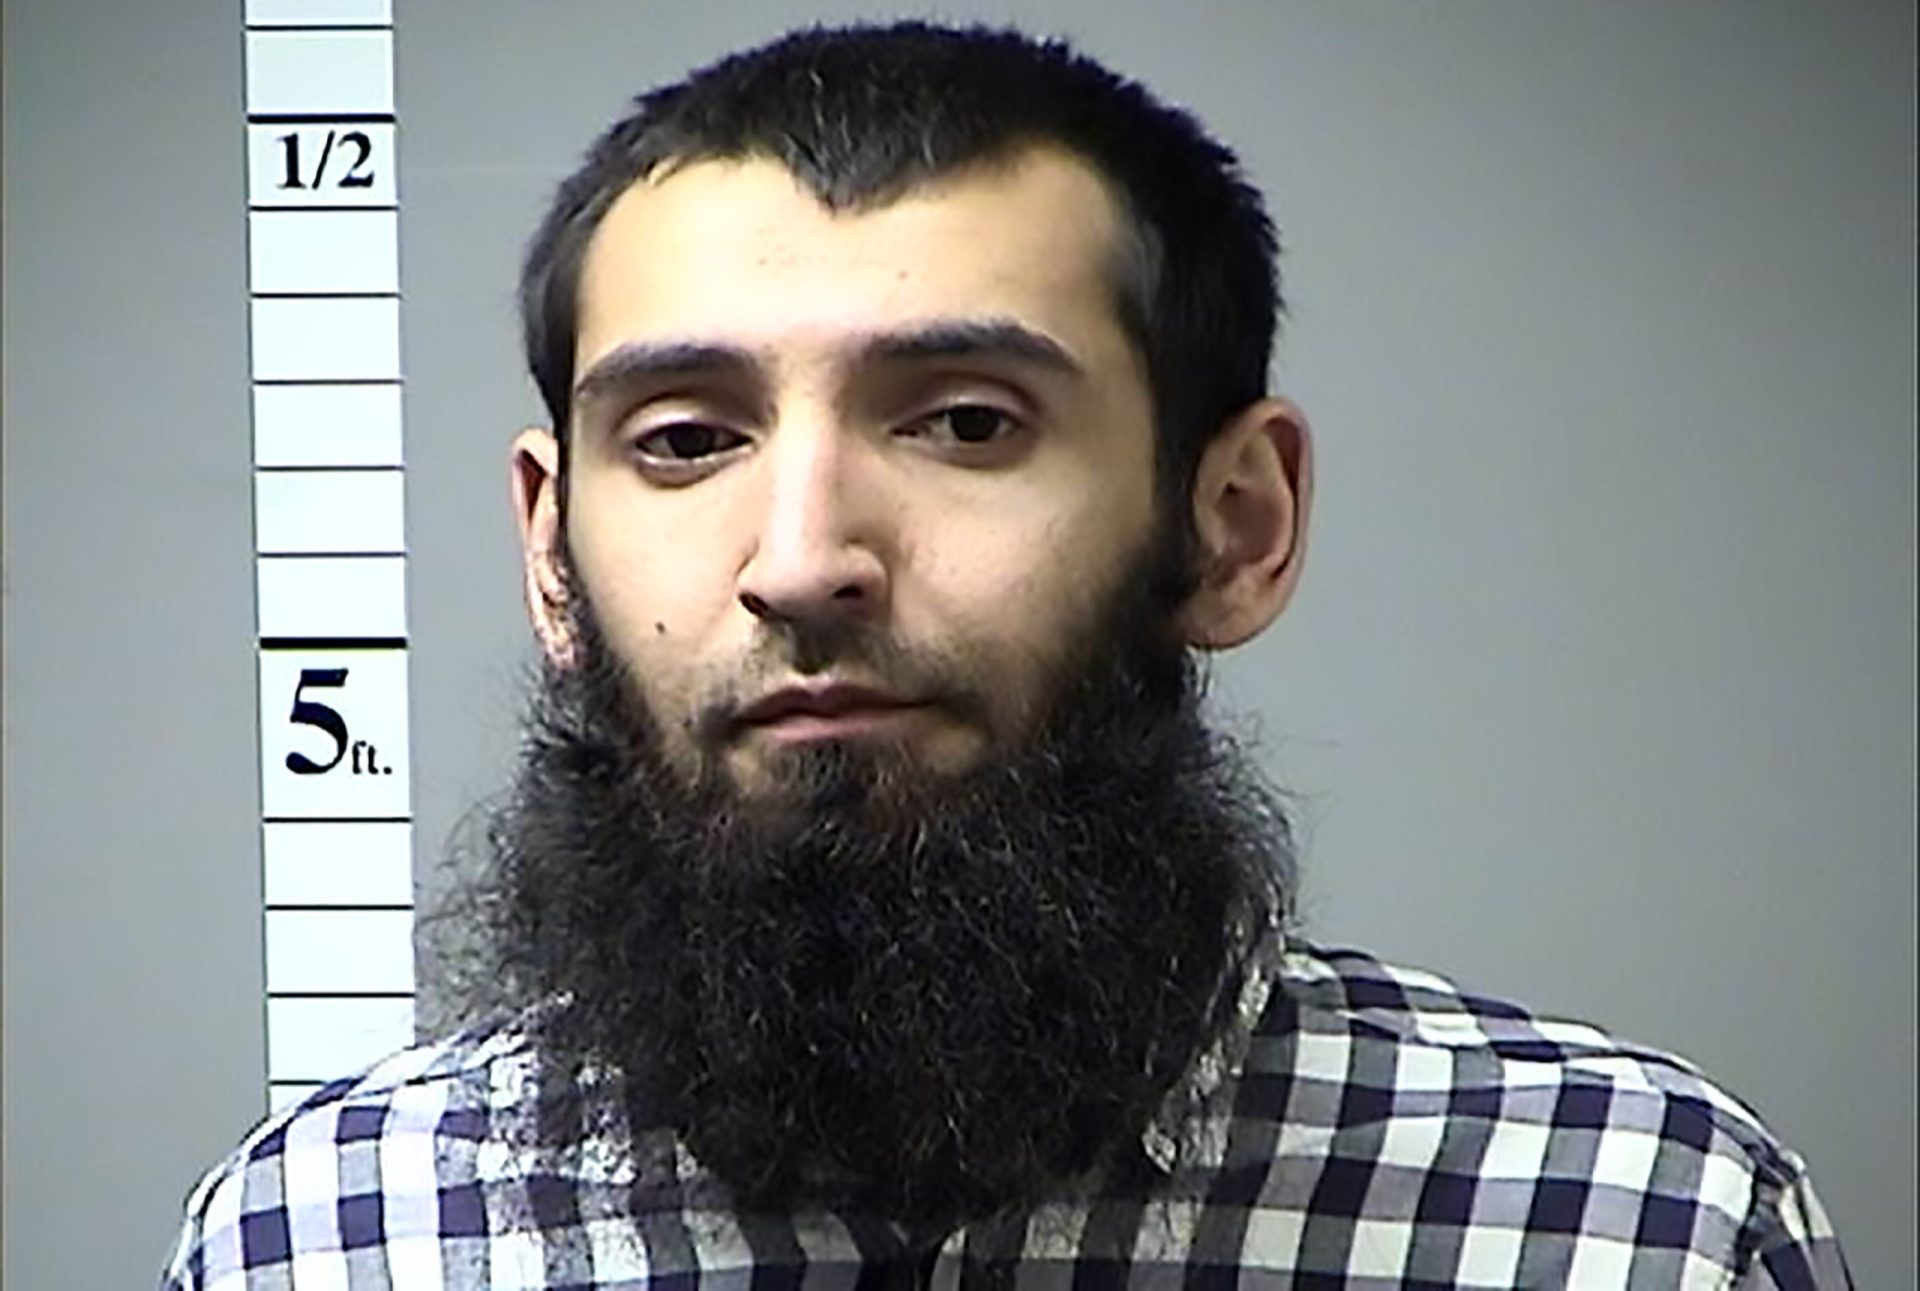 Atacante de Nova Iorque era “soldado do Estado Islâmico”